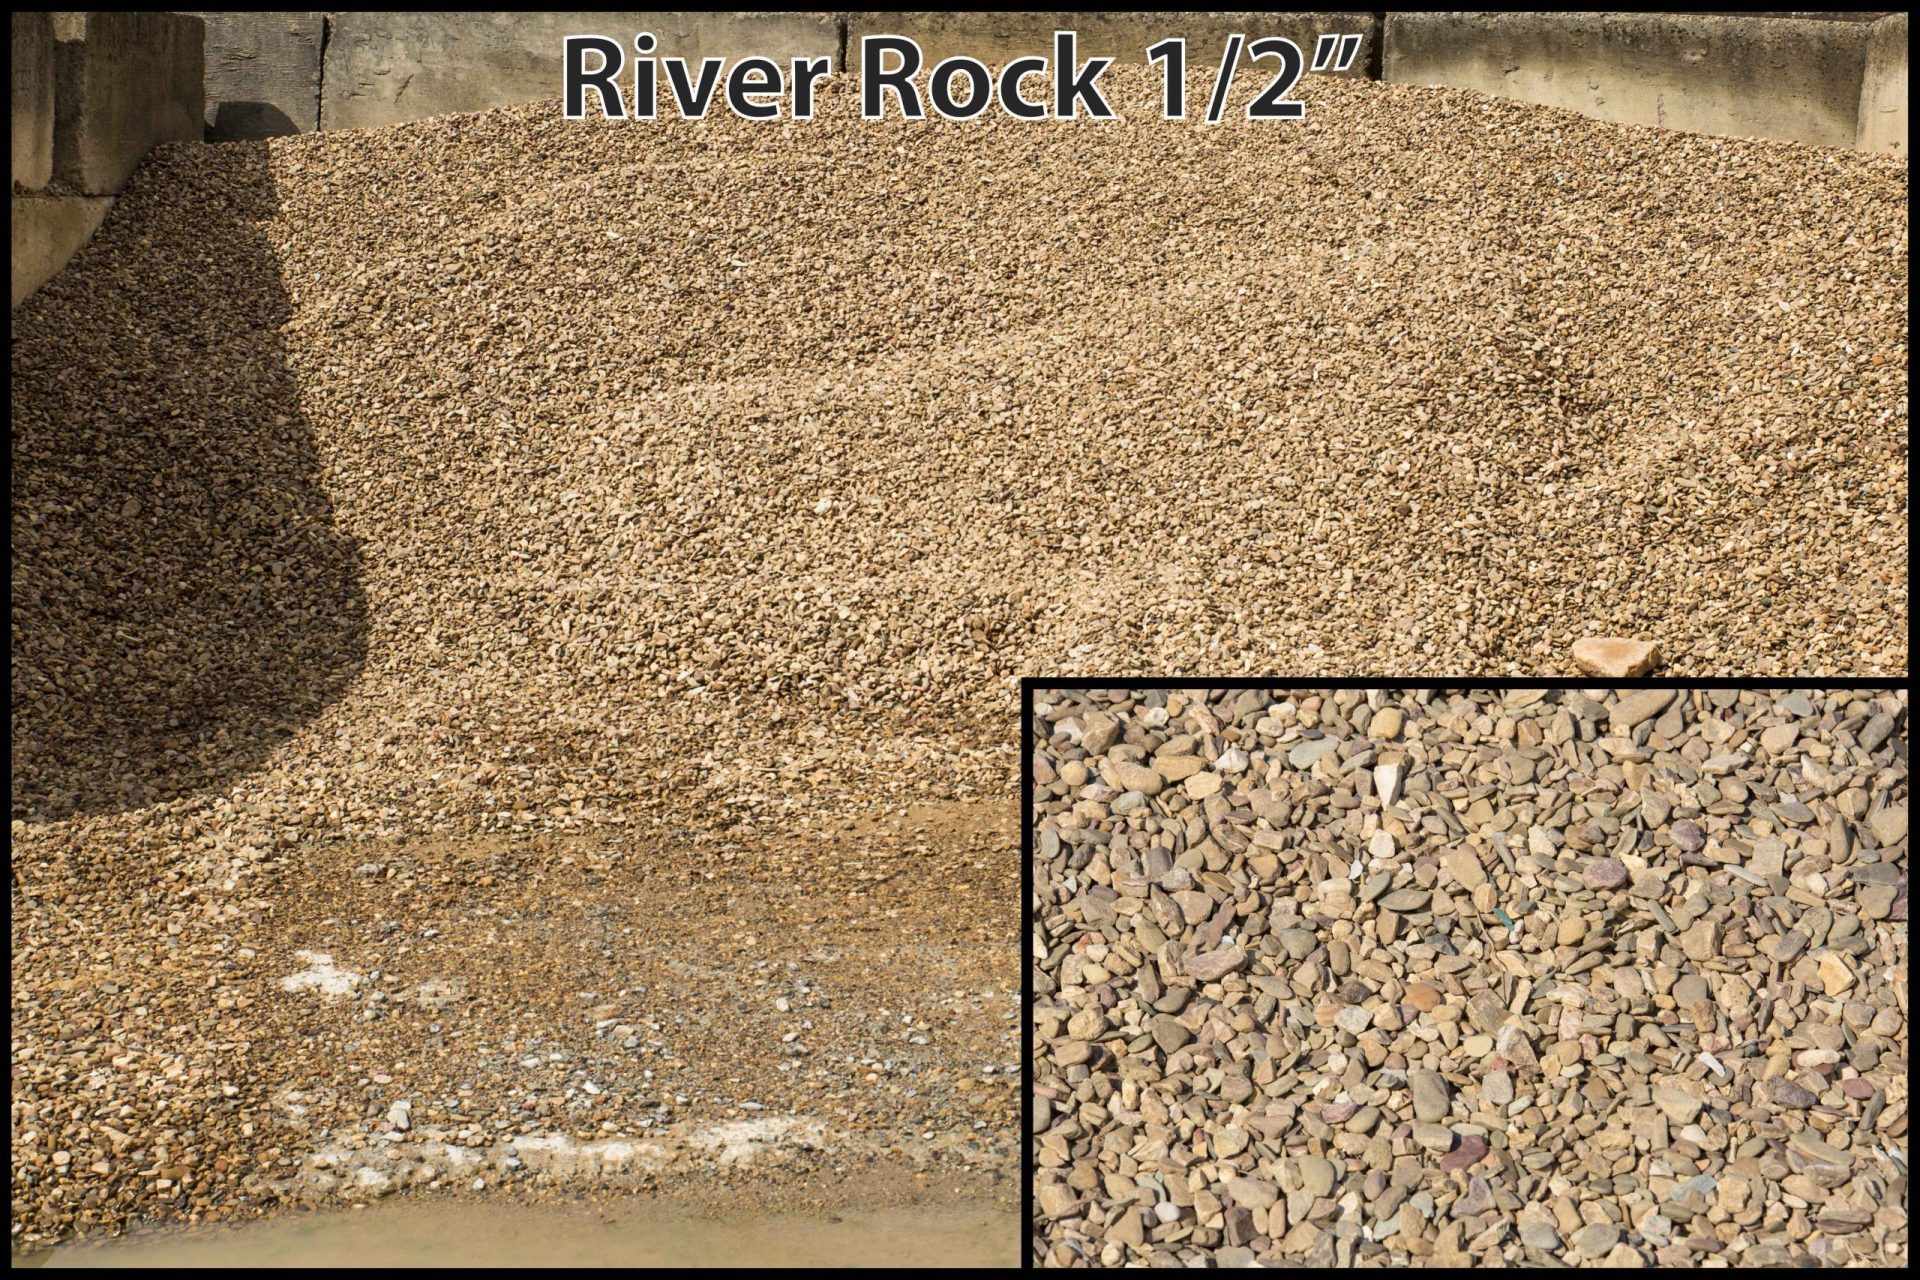 River Rock 1/2"